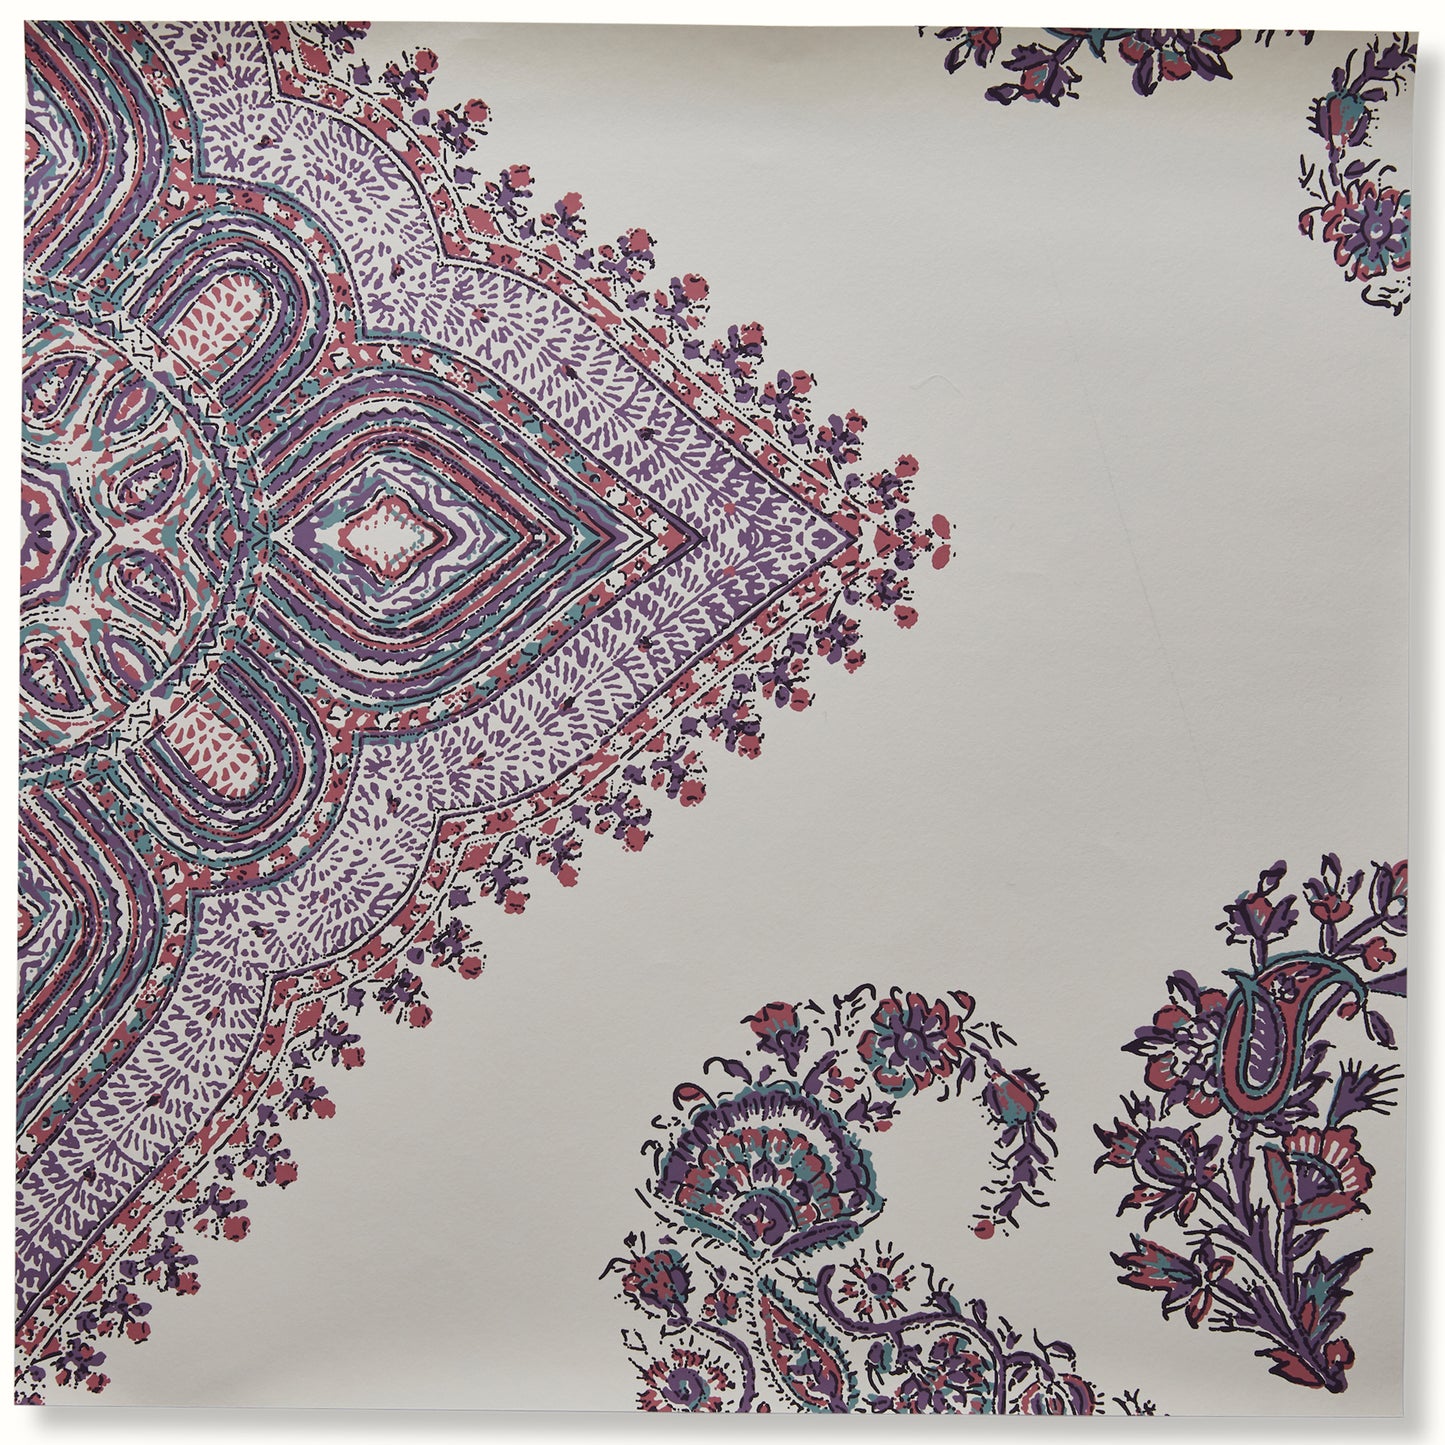 Samarkand Wallpaper - Pasha/Rose